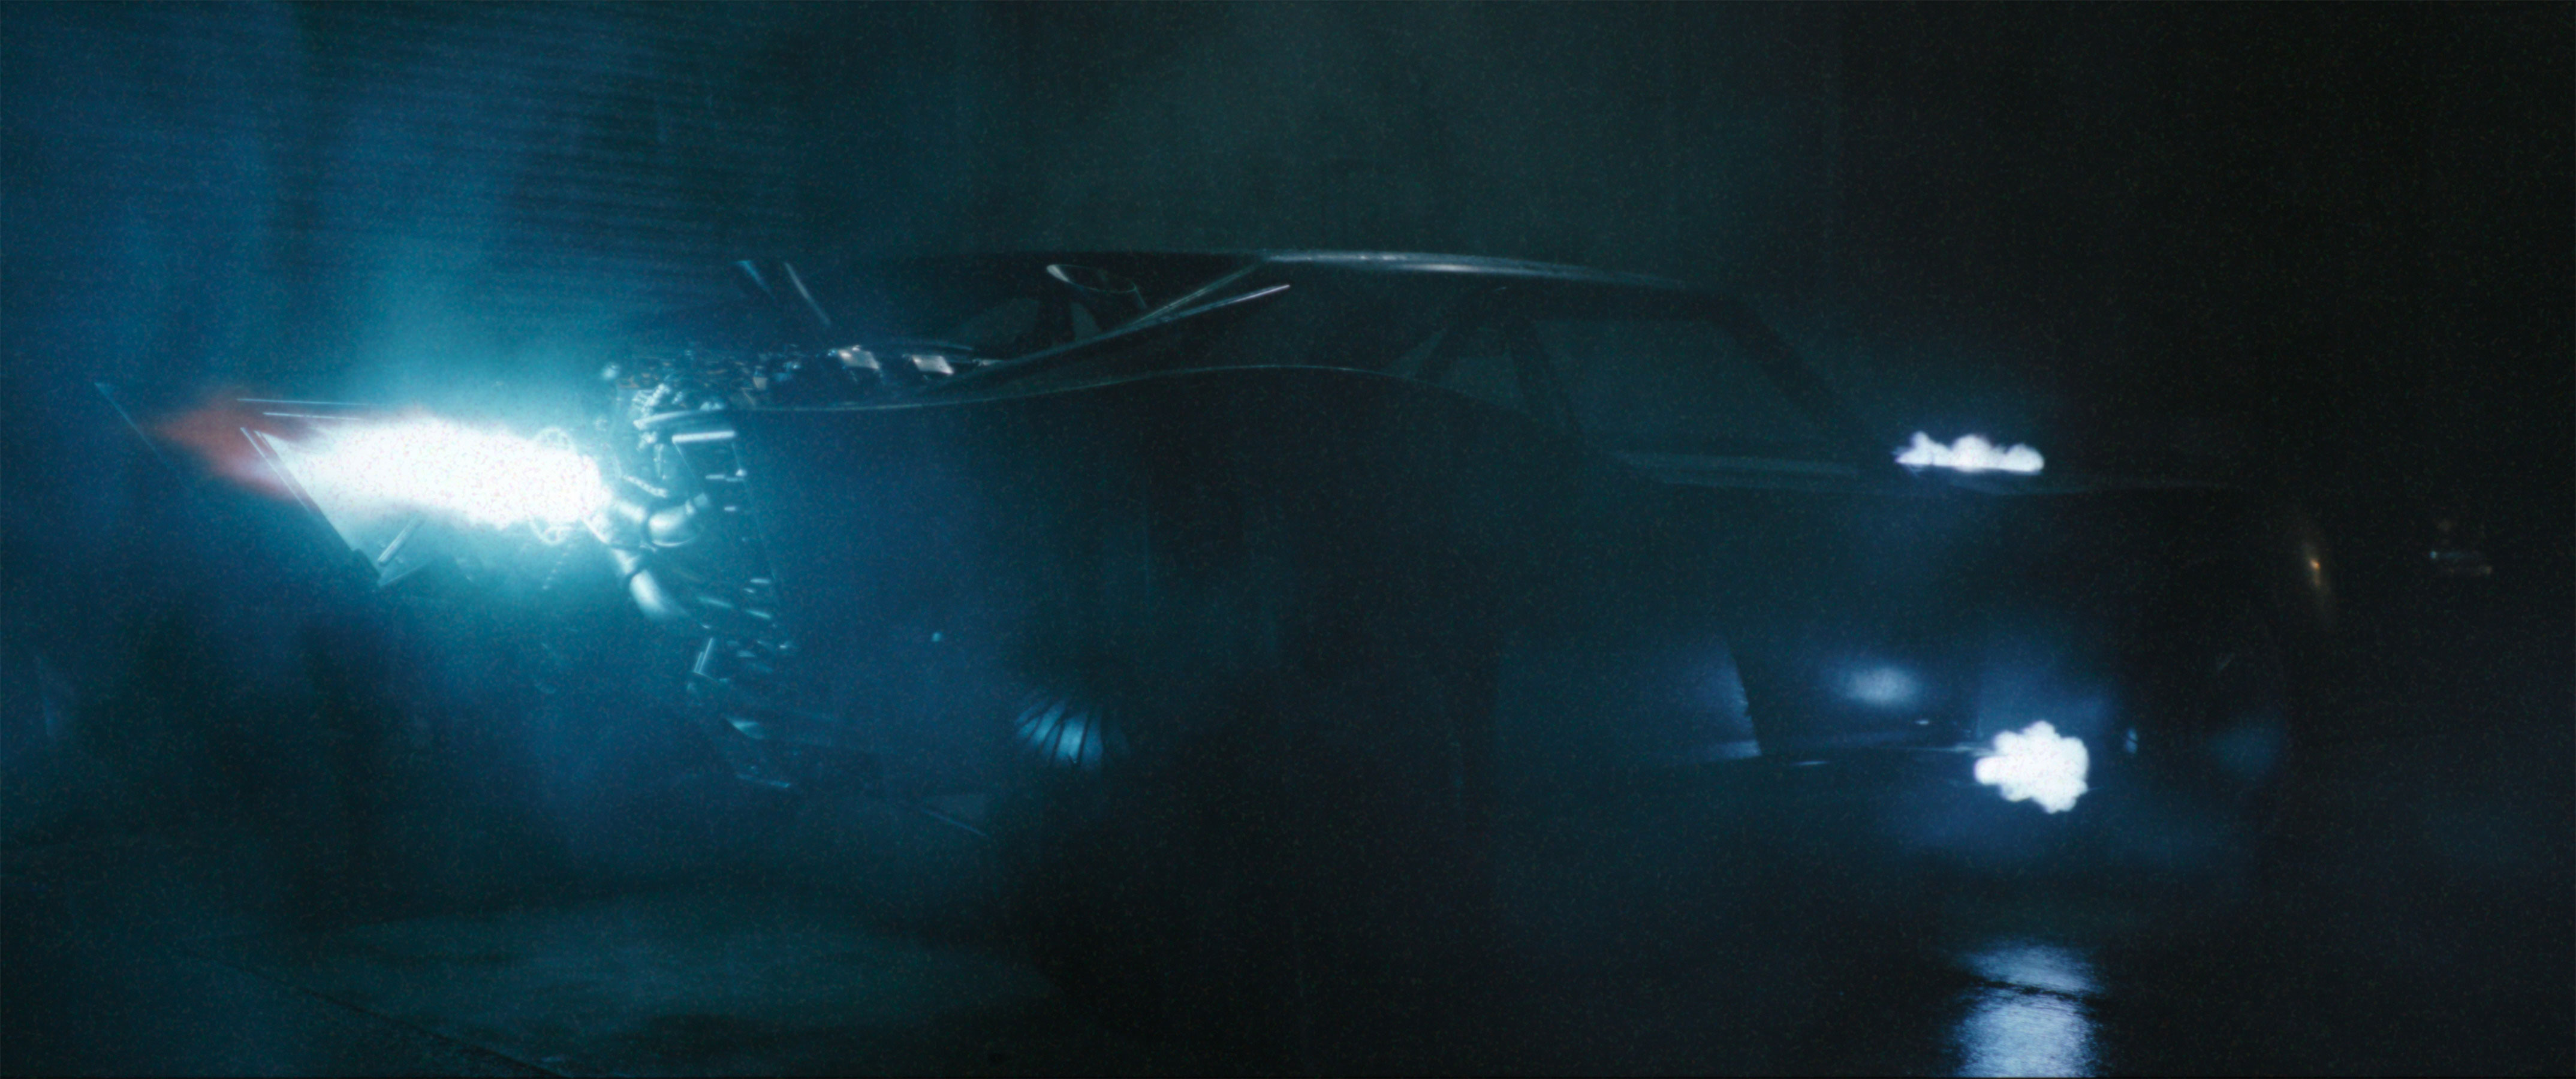 The new Batmobile in The Batman by Matt Reeves